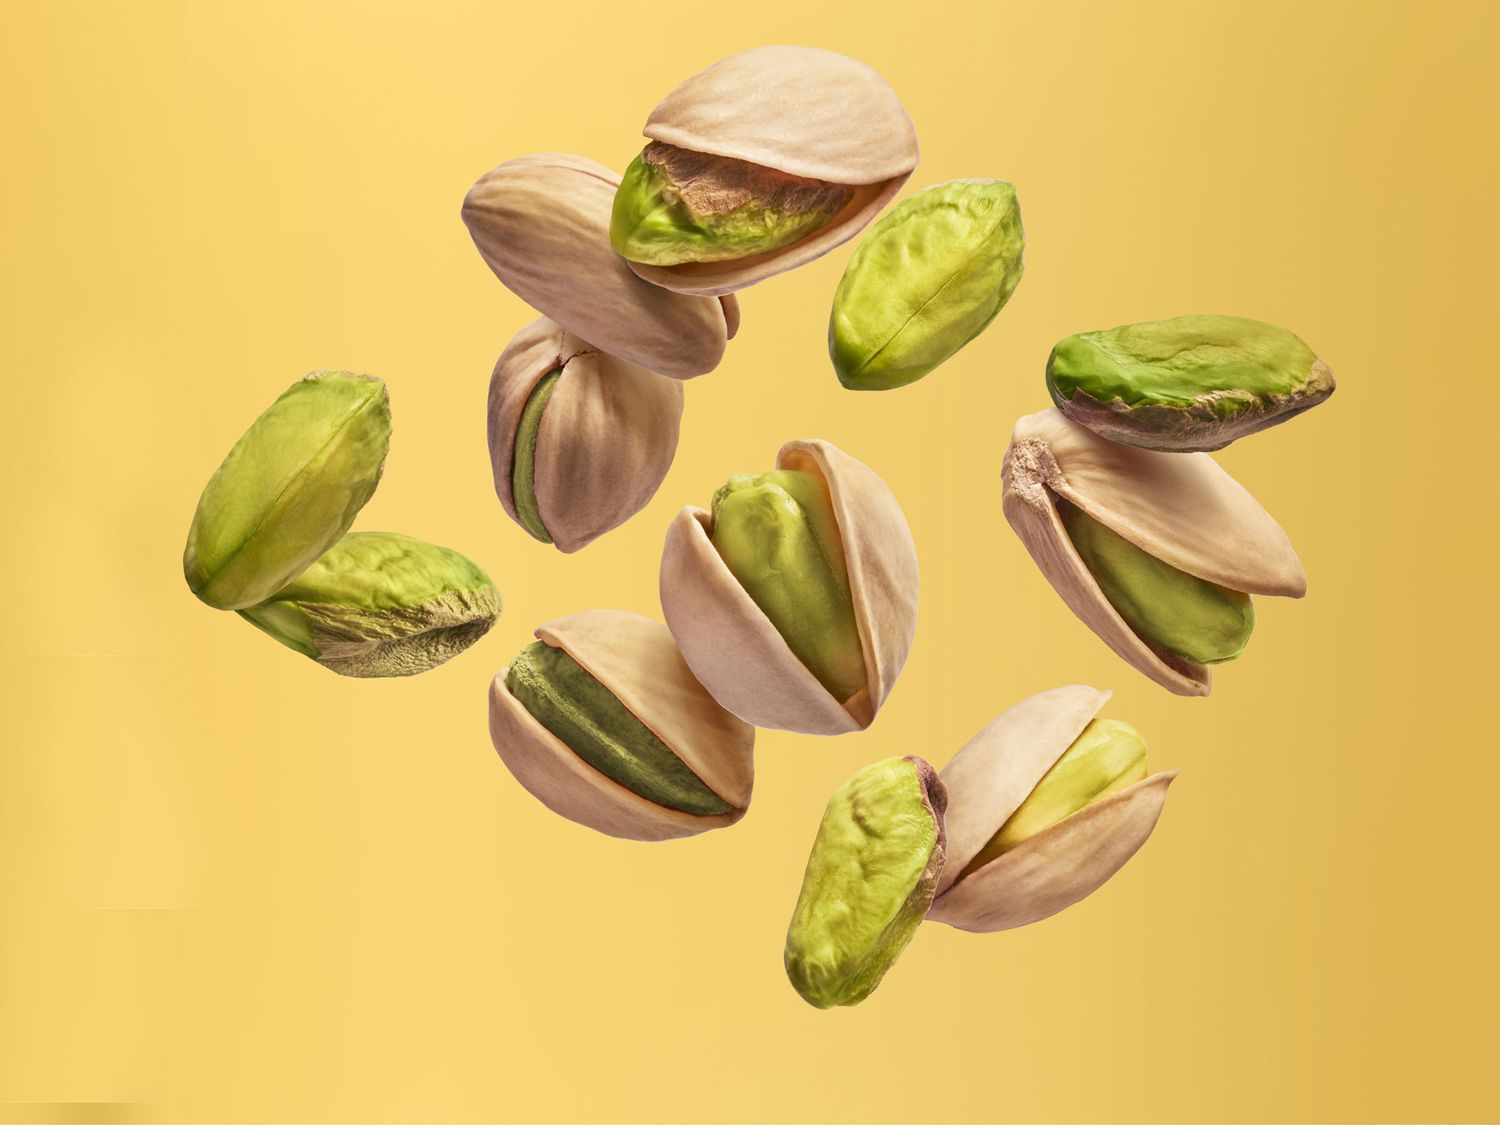 dry roasted pistachio